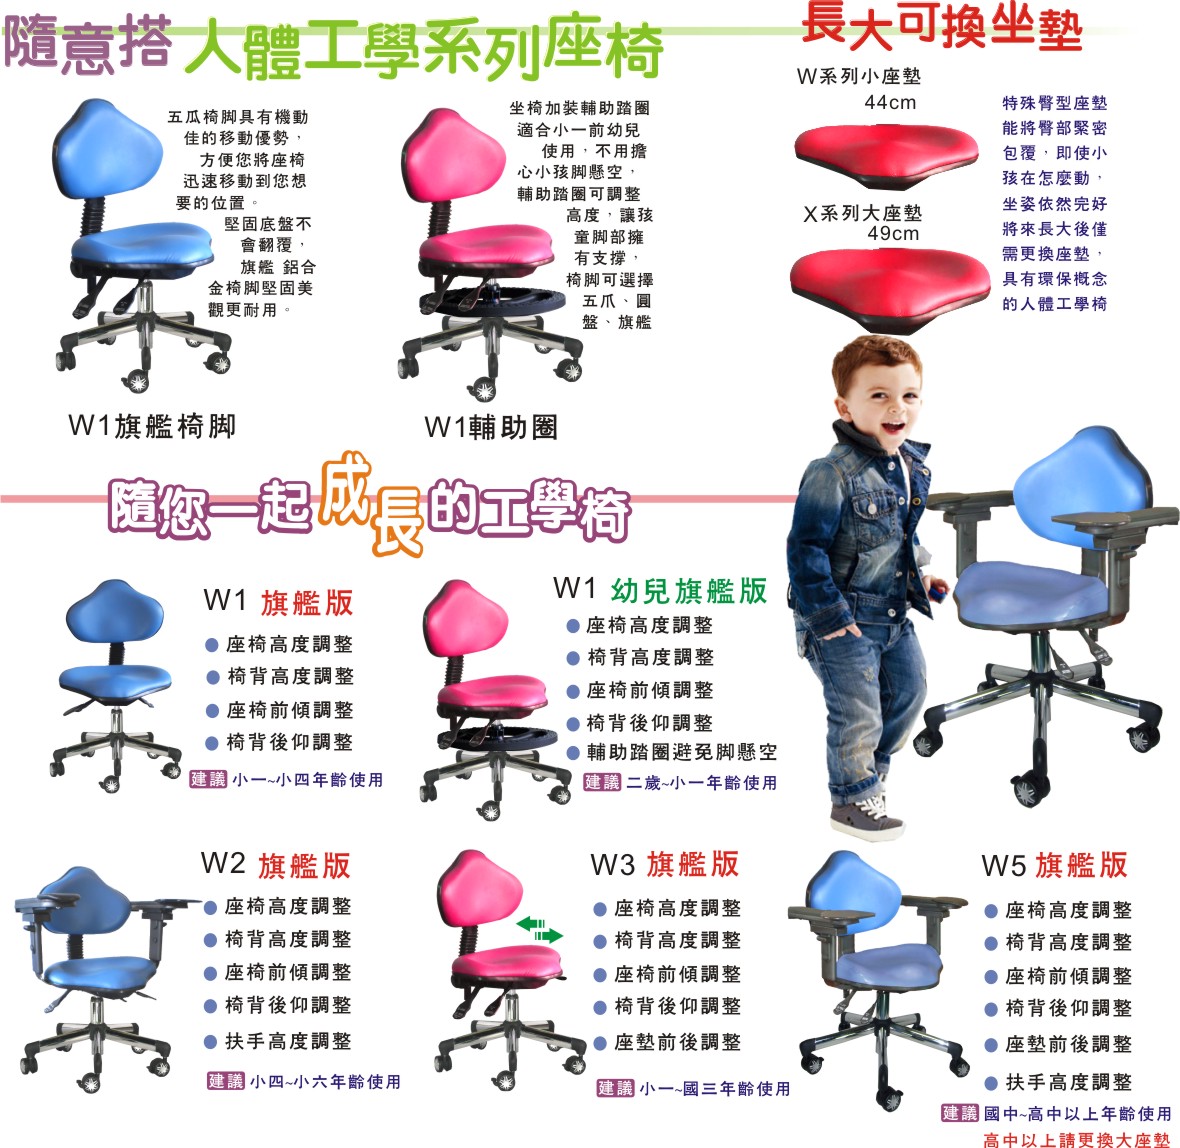 W系列兒童工學椅可以隨意搭配配件組合-巧迪國際企業有限公司